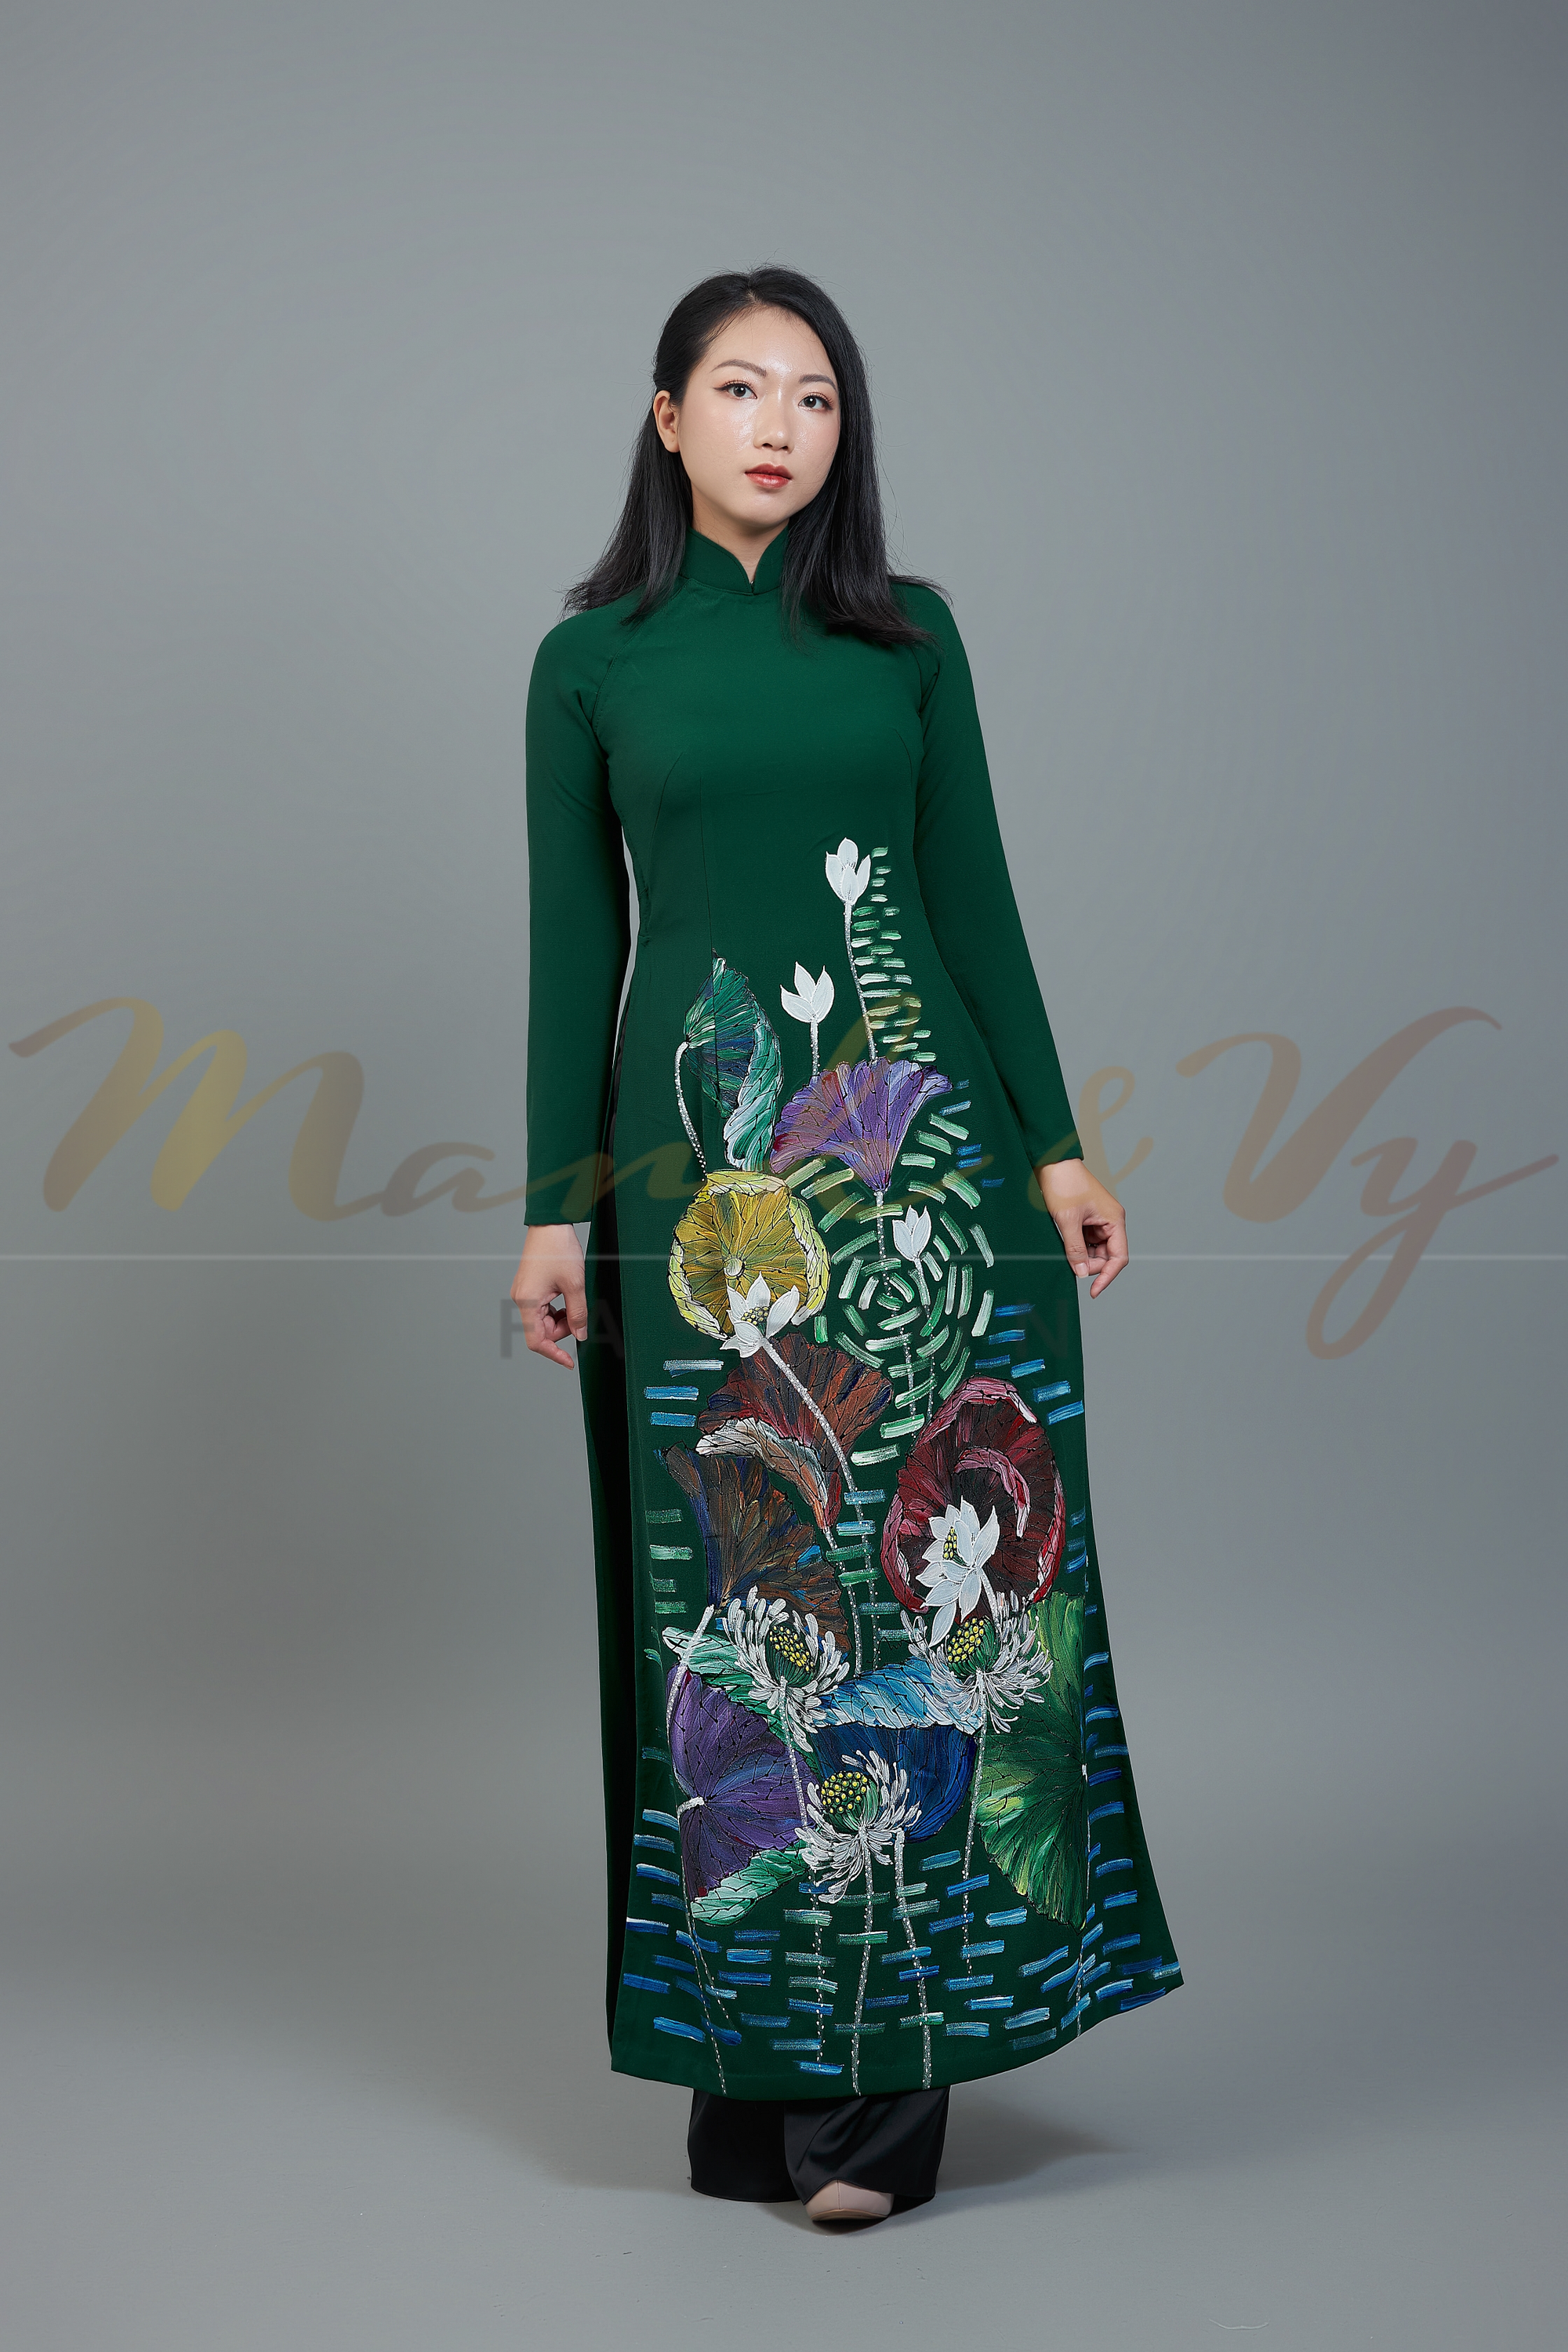 Custom made ao dai. Unique, hand-painted fabric in elegant, dark green color.